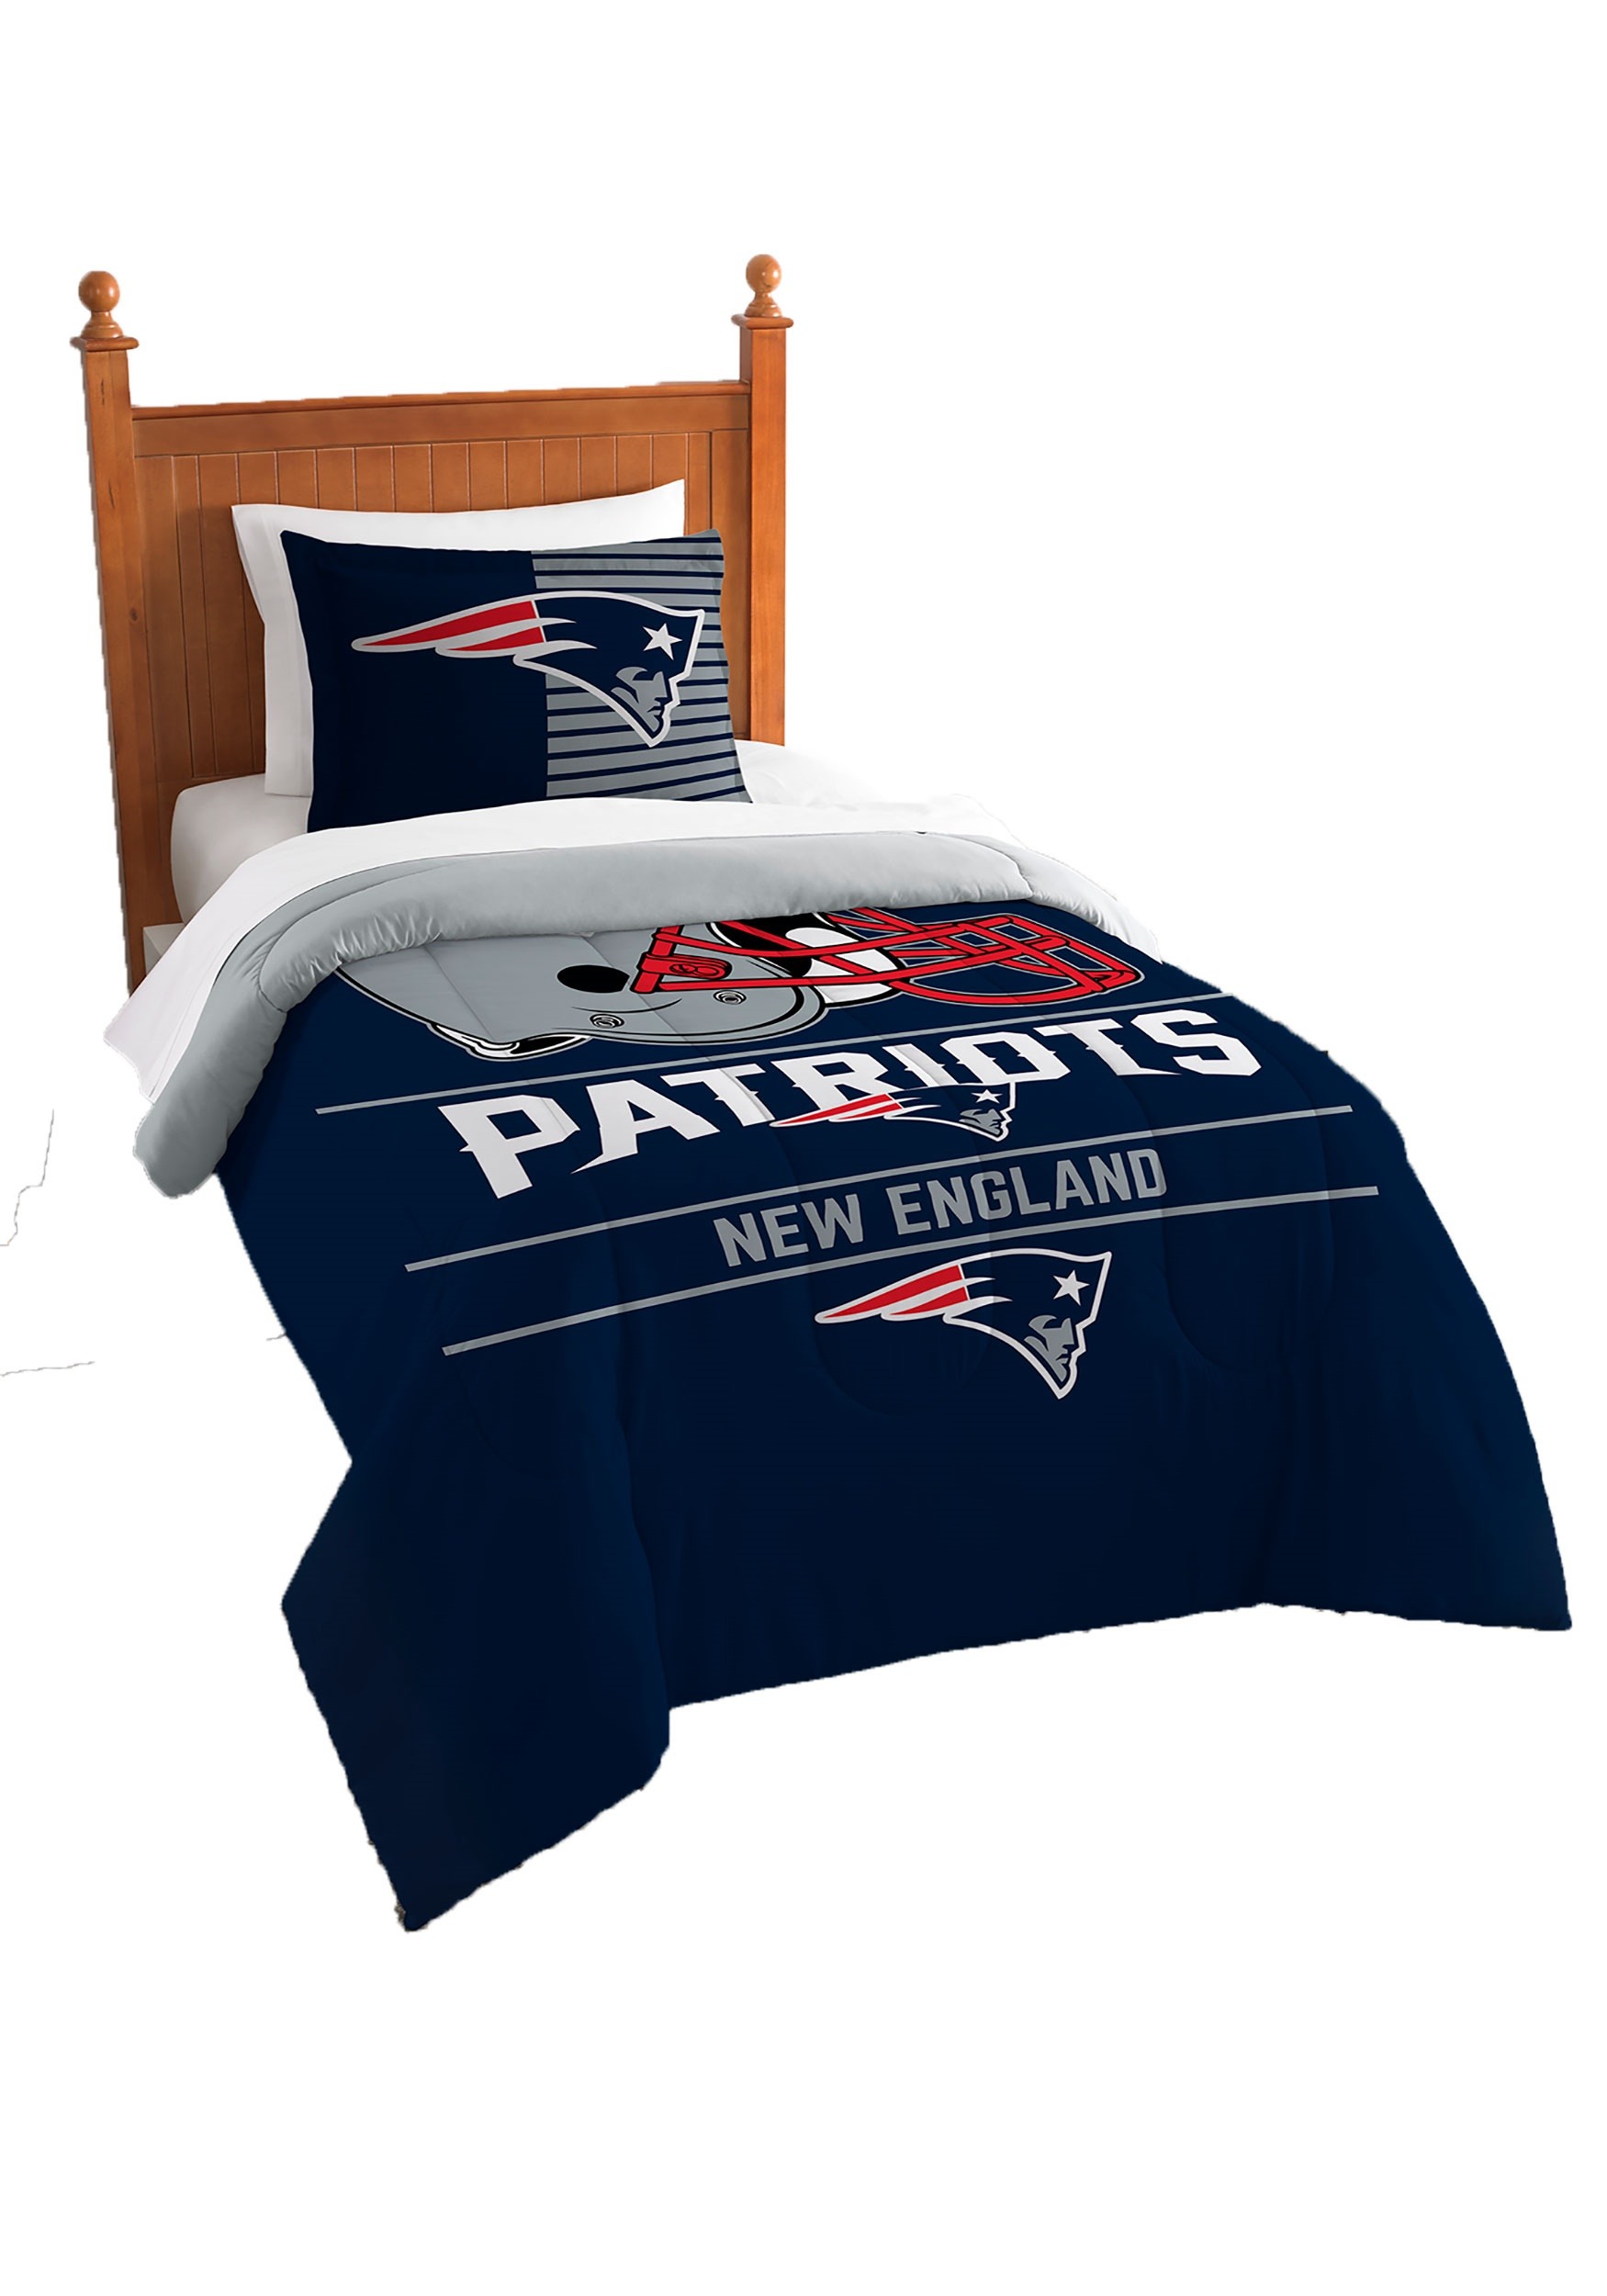 new comforter set